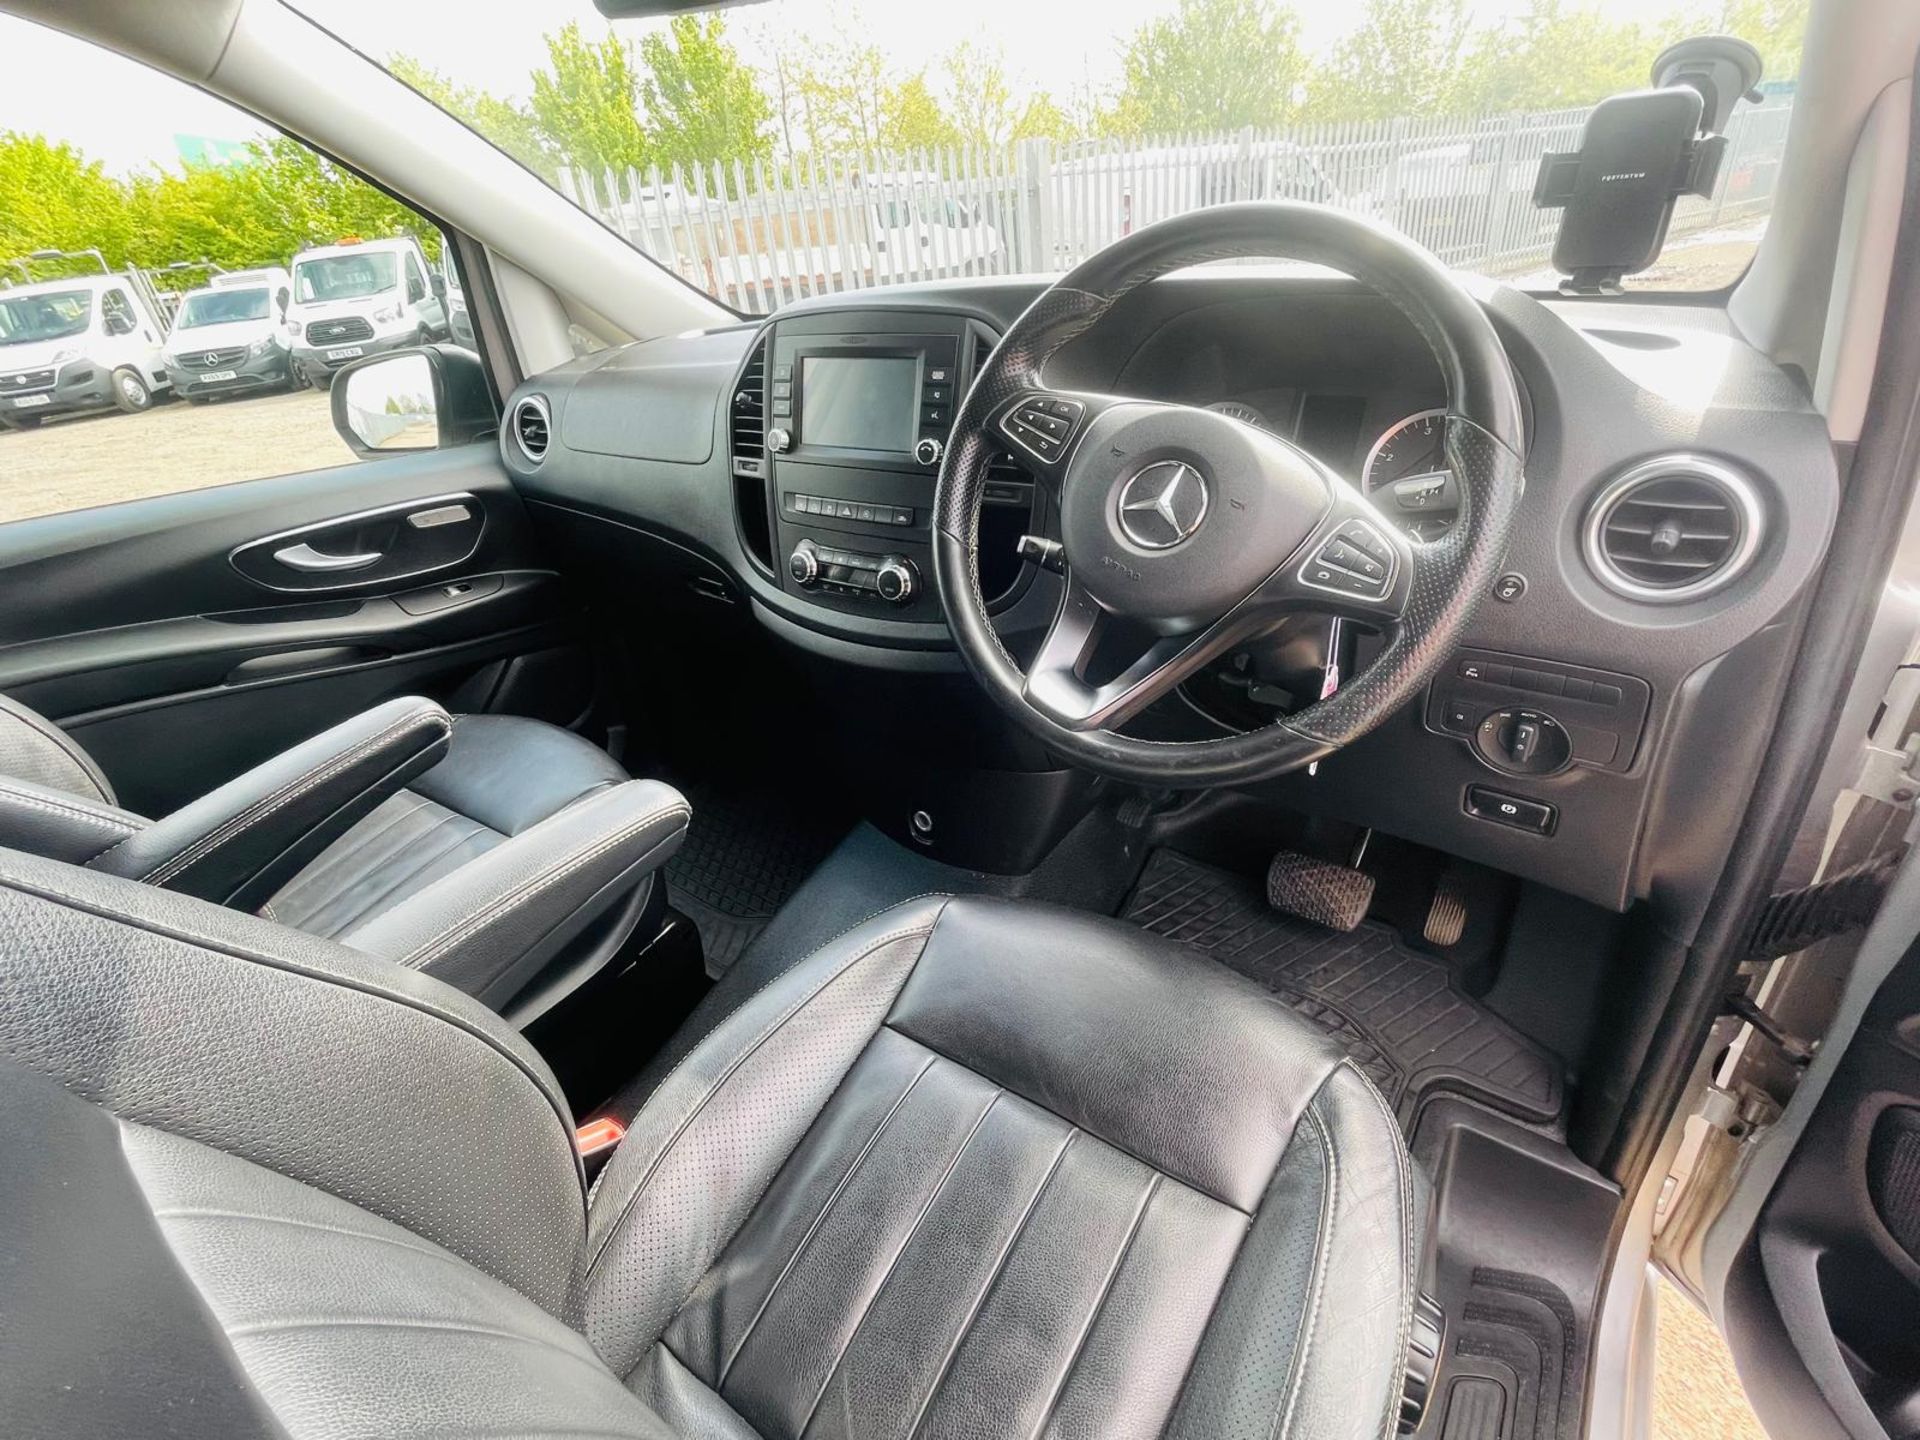 Mercedes-Benz Vito Premium 2.1 119 CDI 7G Tronic Crew Cab LWB Automatic 2019'19 Reg'- Alloy Wheels - Image 16 of 31